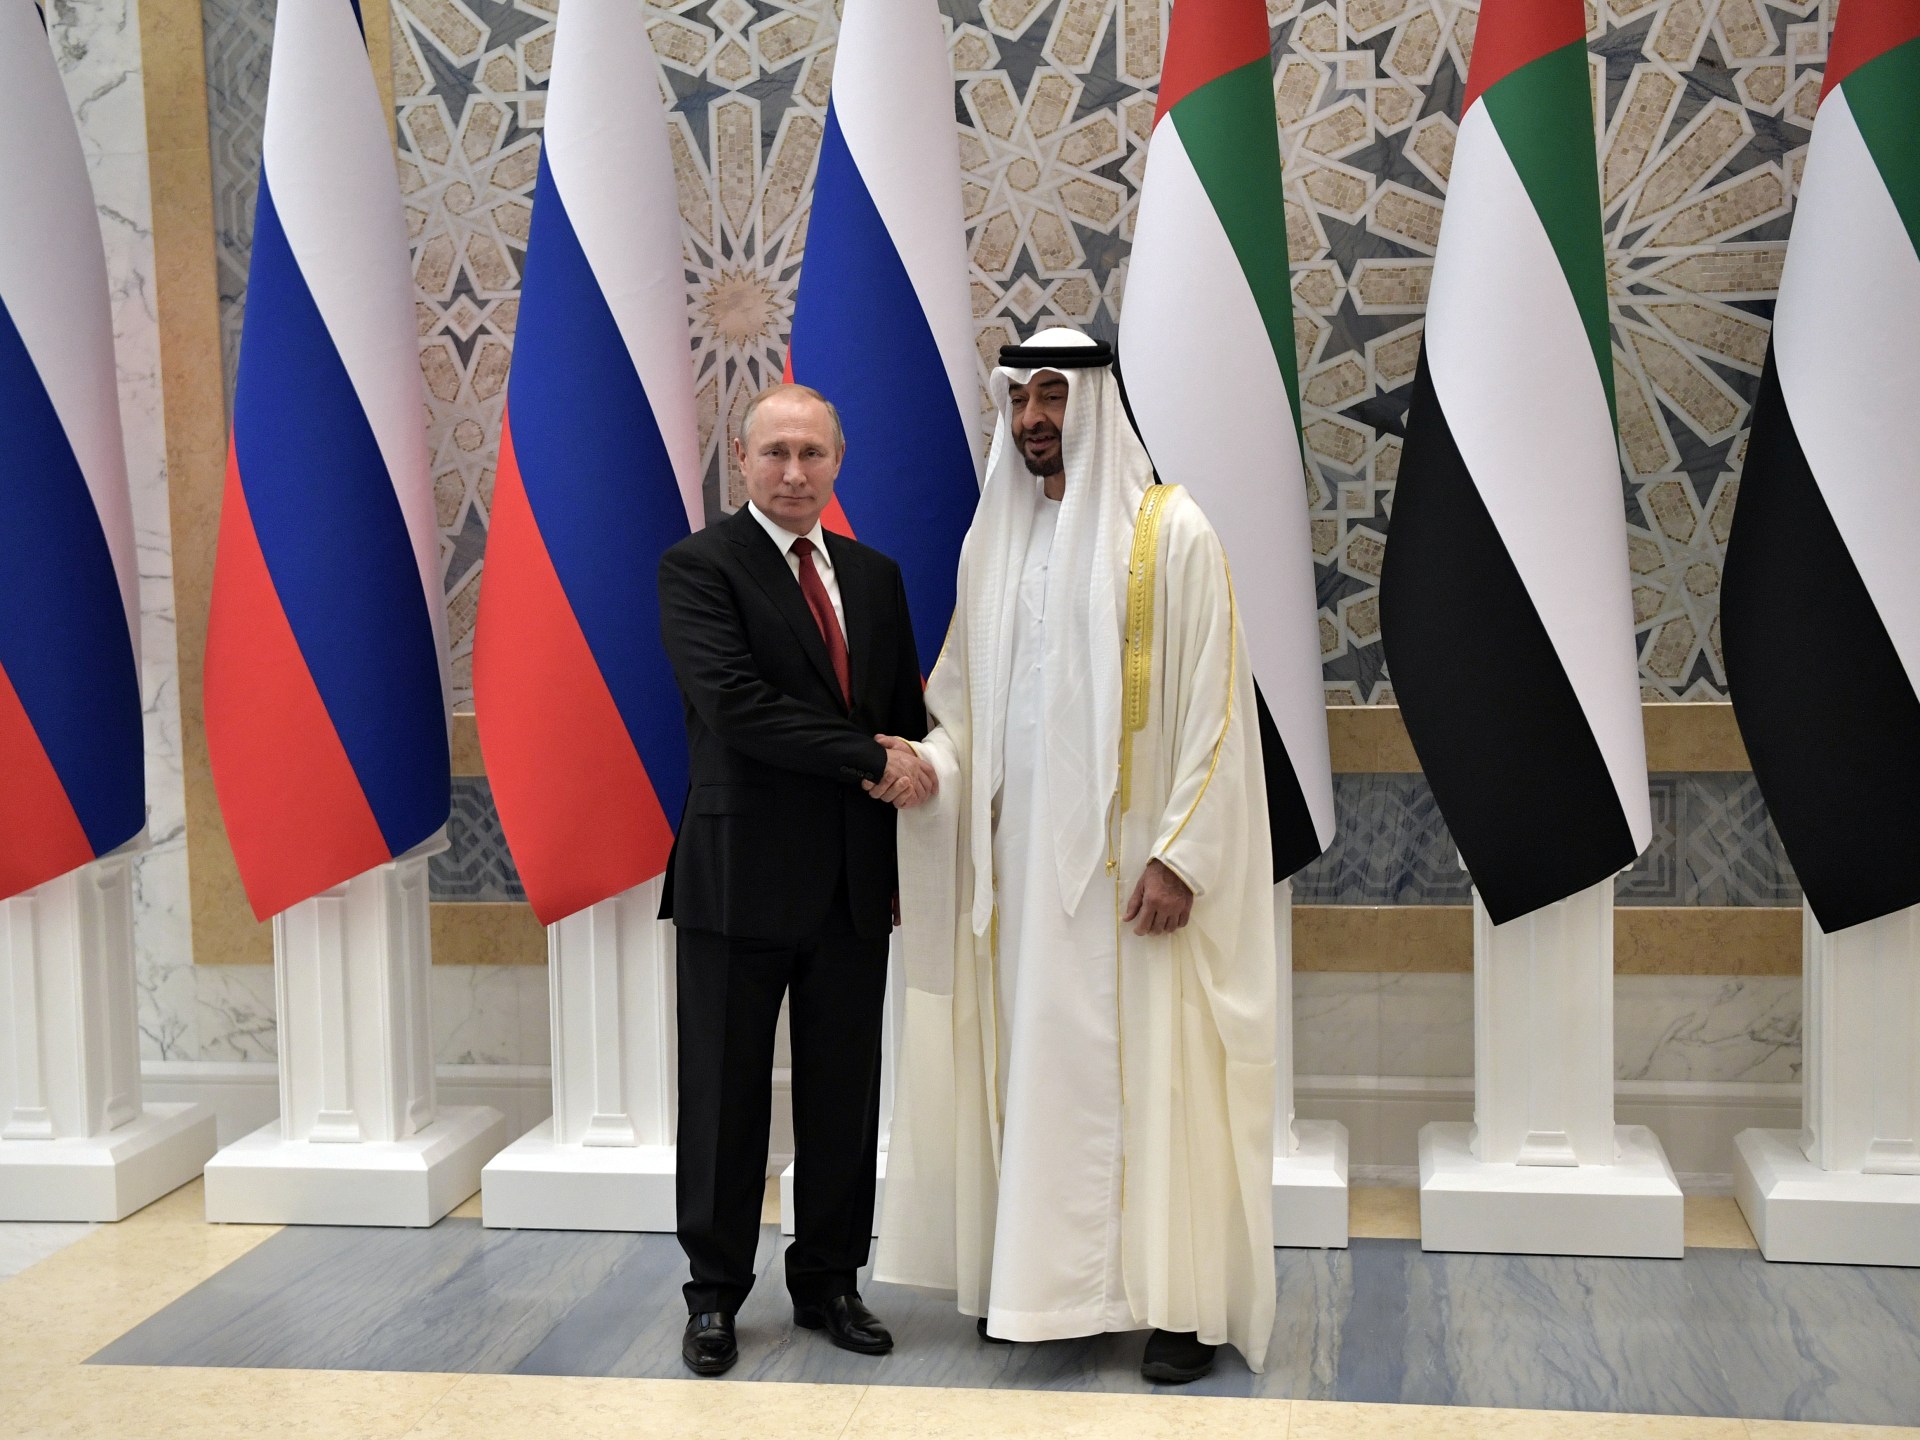 Putin mengunjungi Arab Saudi dan UEA, dengan agenda perang antara Israel dan Hamas  Berita politik